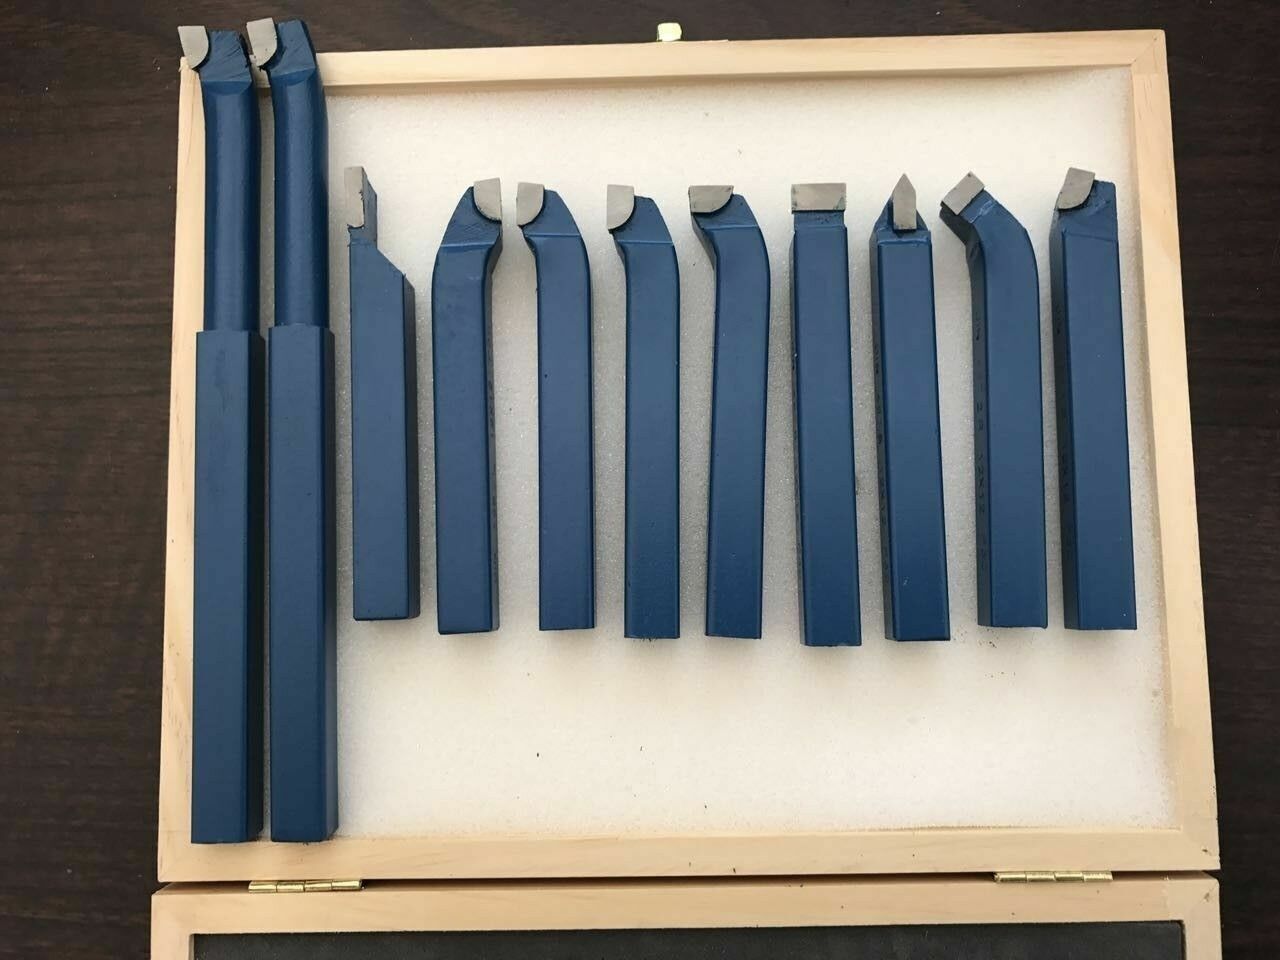 11Pcs/Set 12mm Metal Lathe Tools /knife Bits for Milling Cutting Turning